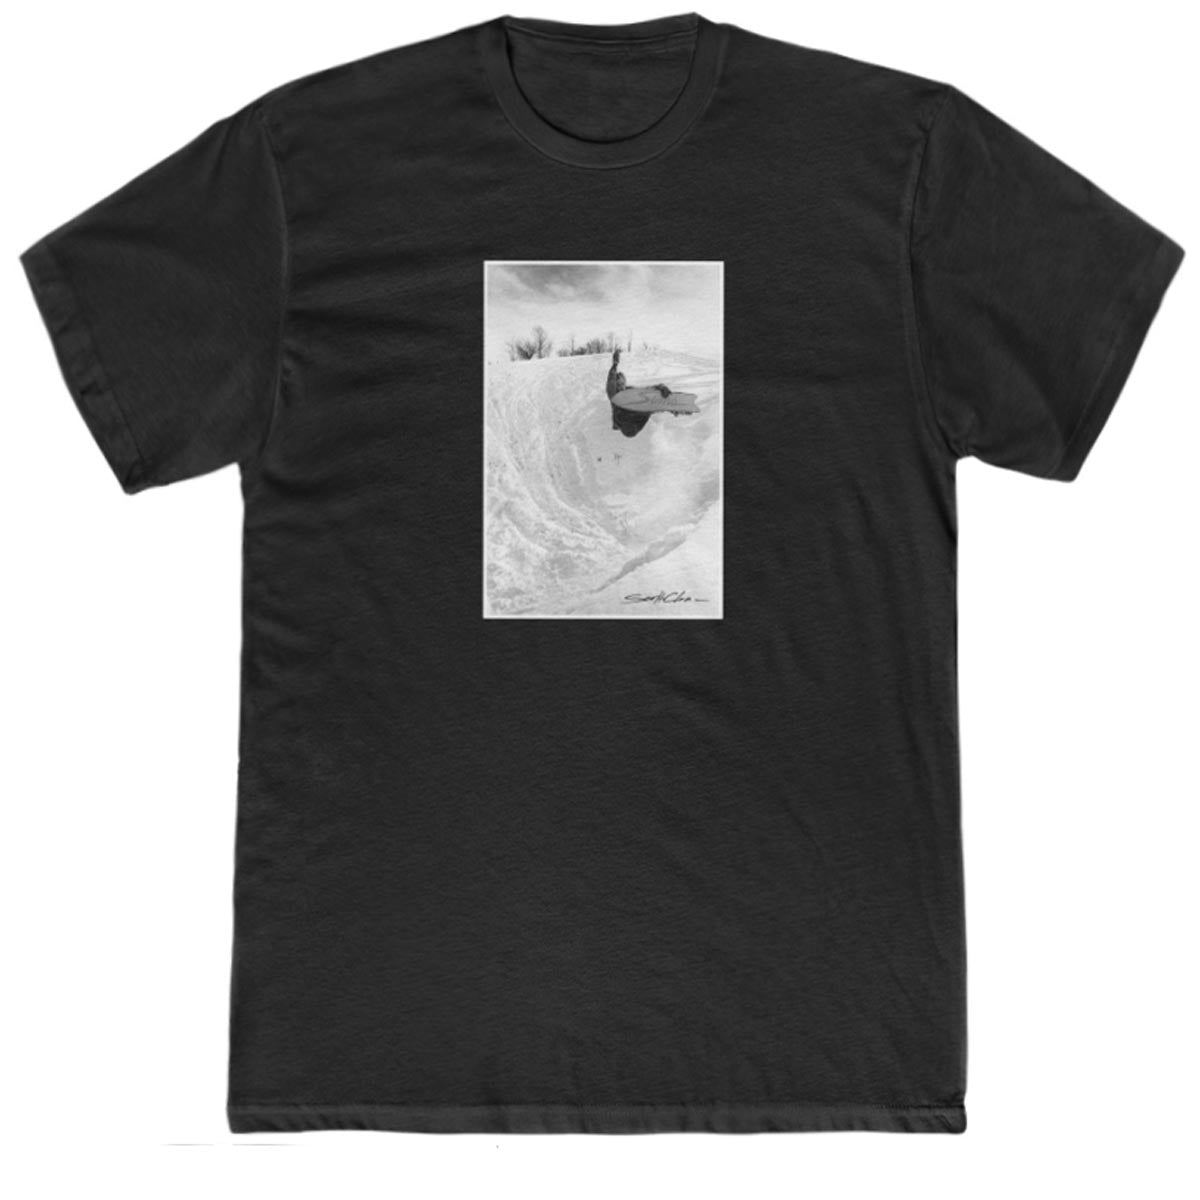 45RPM Vintage Snowboarding Scott Clum T-Shirt - Black image 1